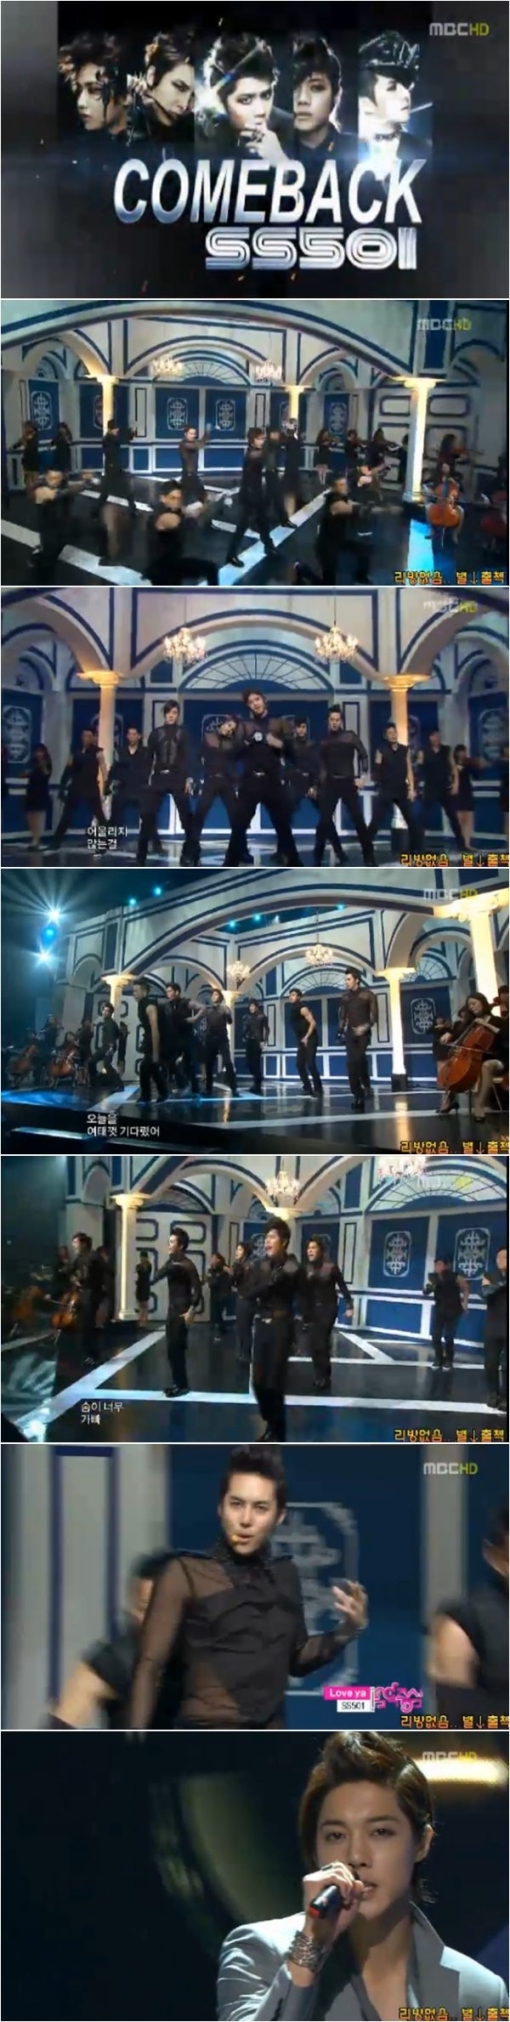 SS501 en MBC ‘Music Core’ 5/06/10 Comeback_musiccore